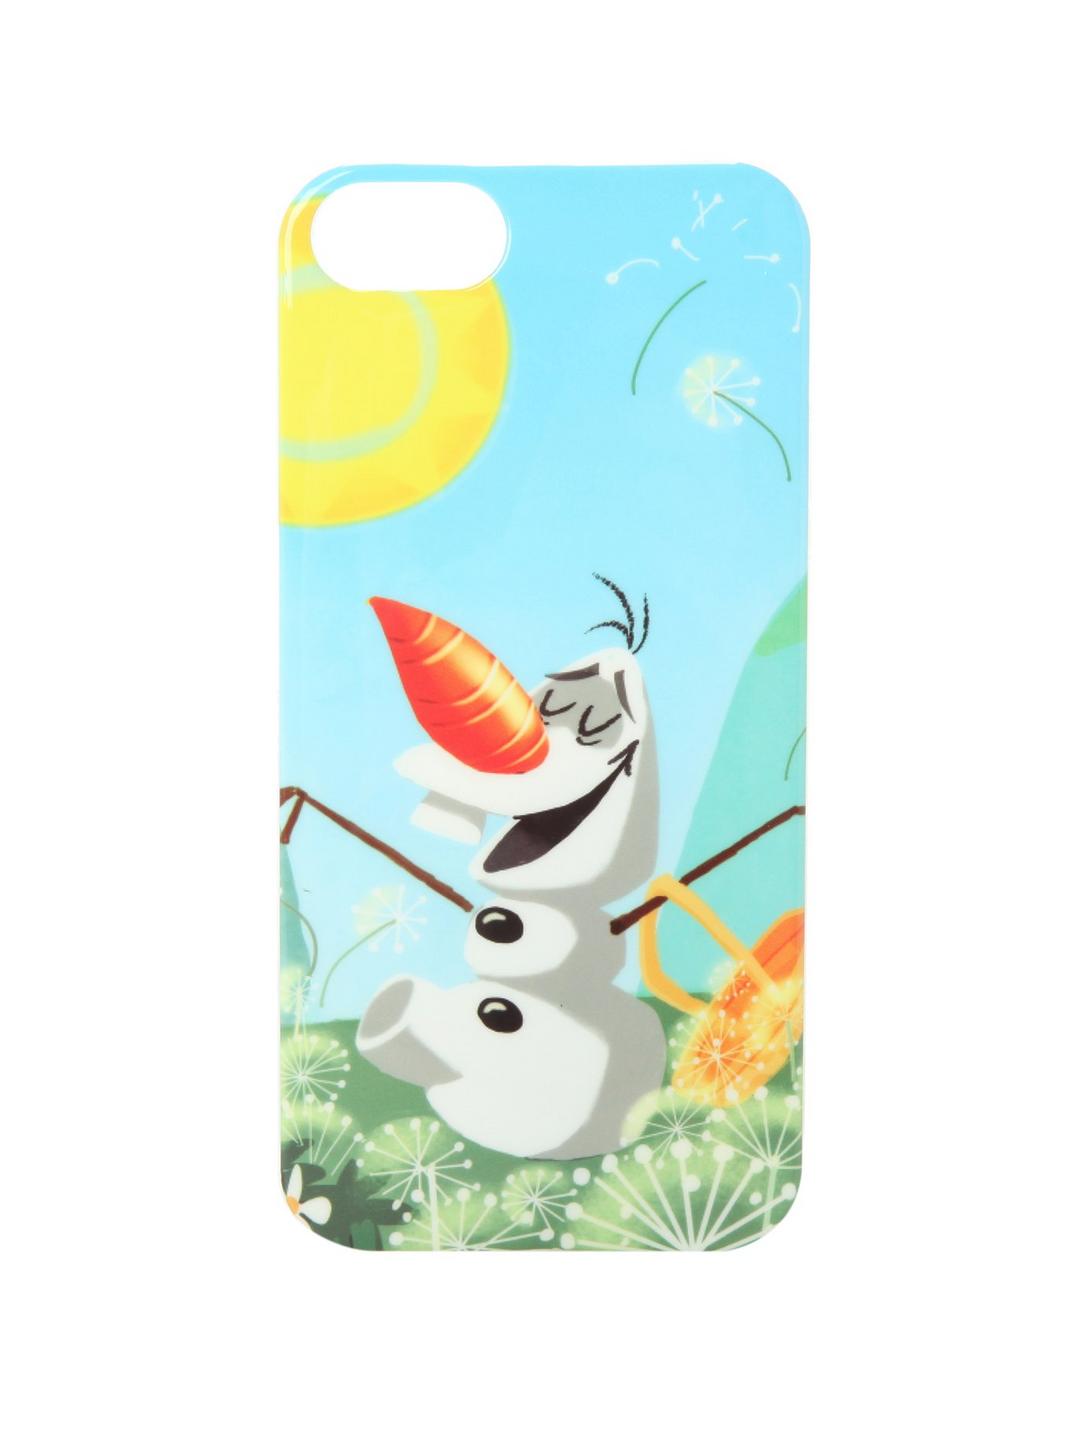 Disney Frozen Olaf iPhone 5/5S Case, , hi-res